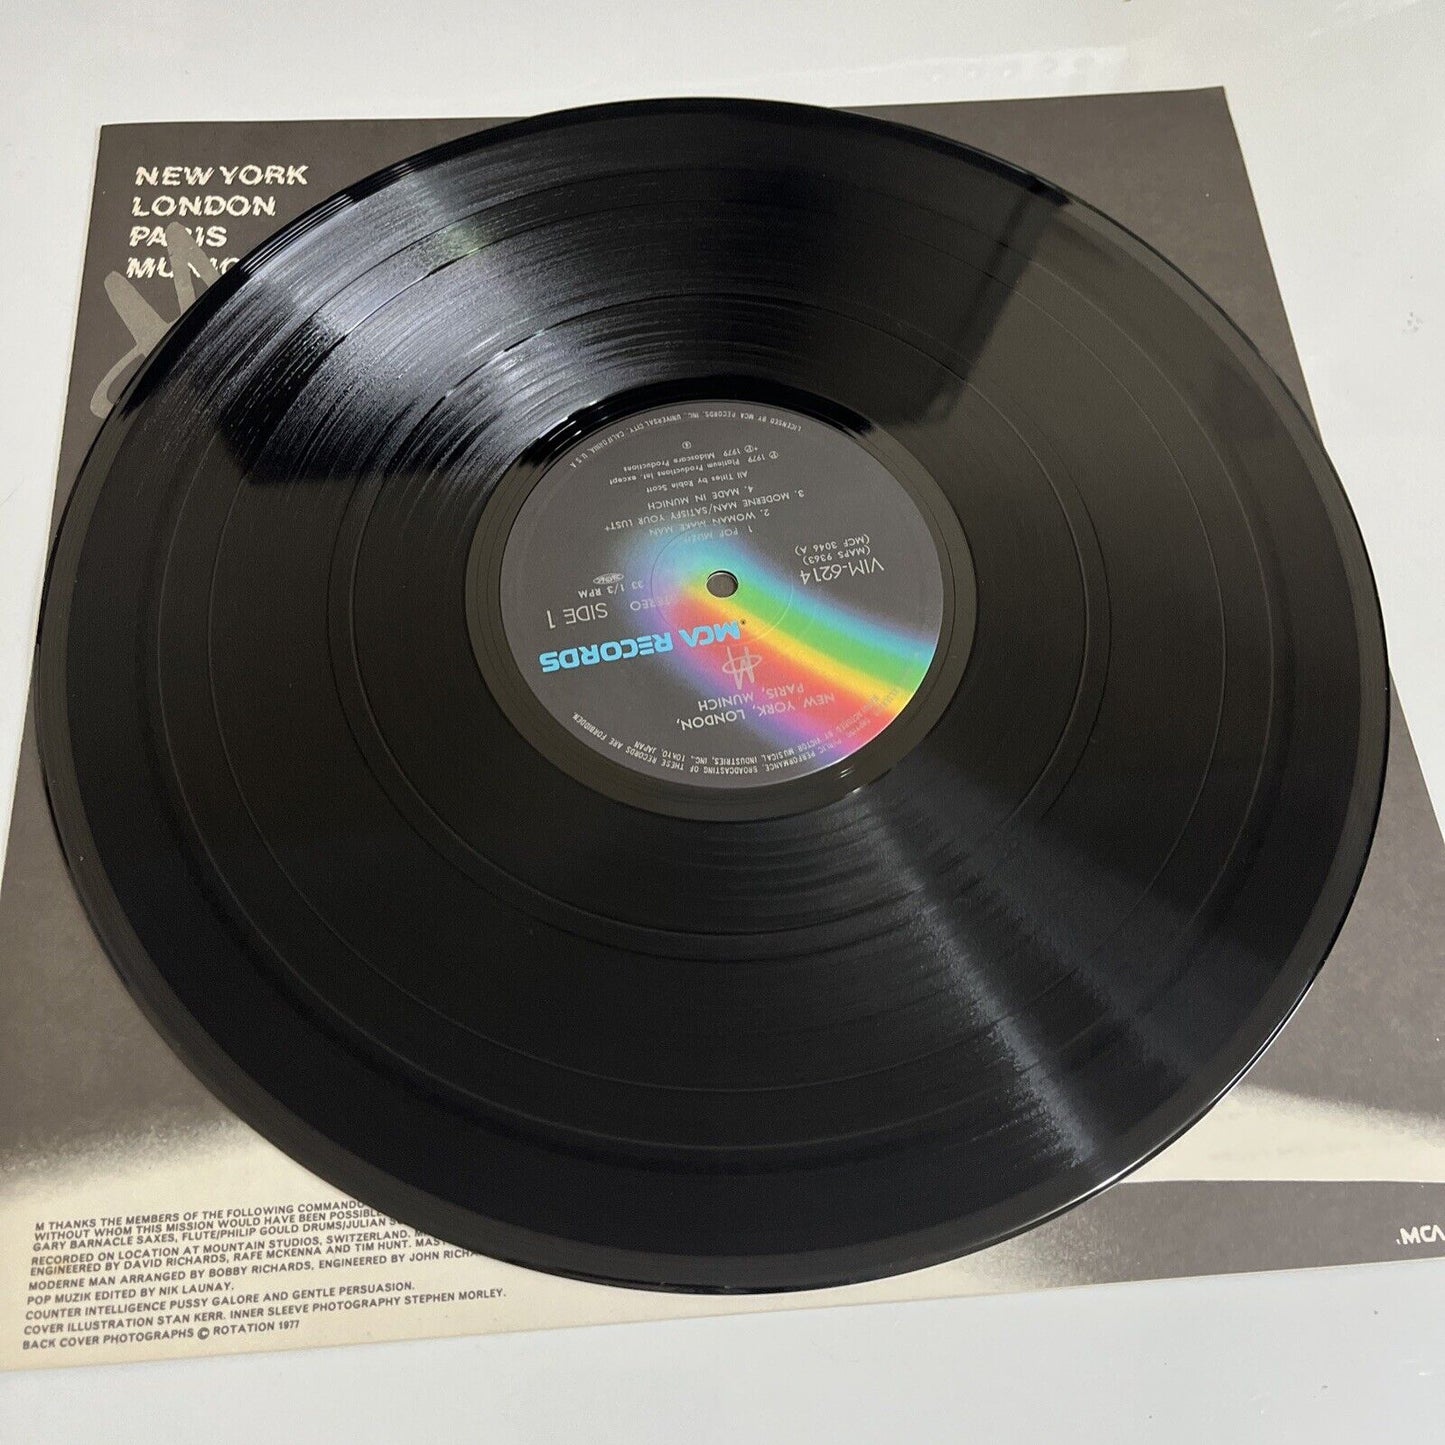 M – New York, London, Paris, Munich LP 1979 Vinyl Record Obi VIM-6214